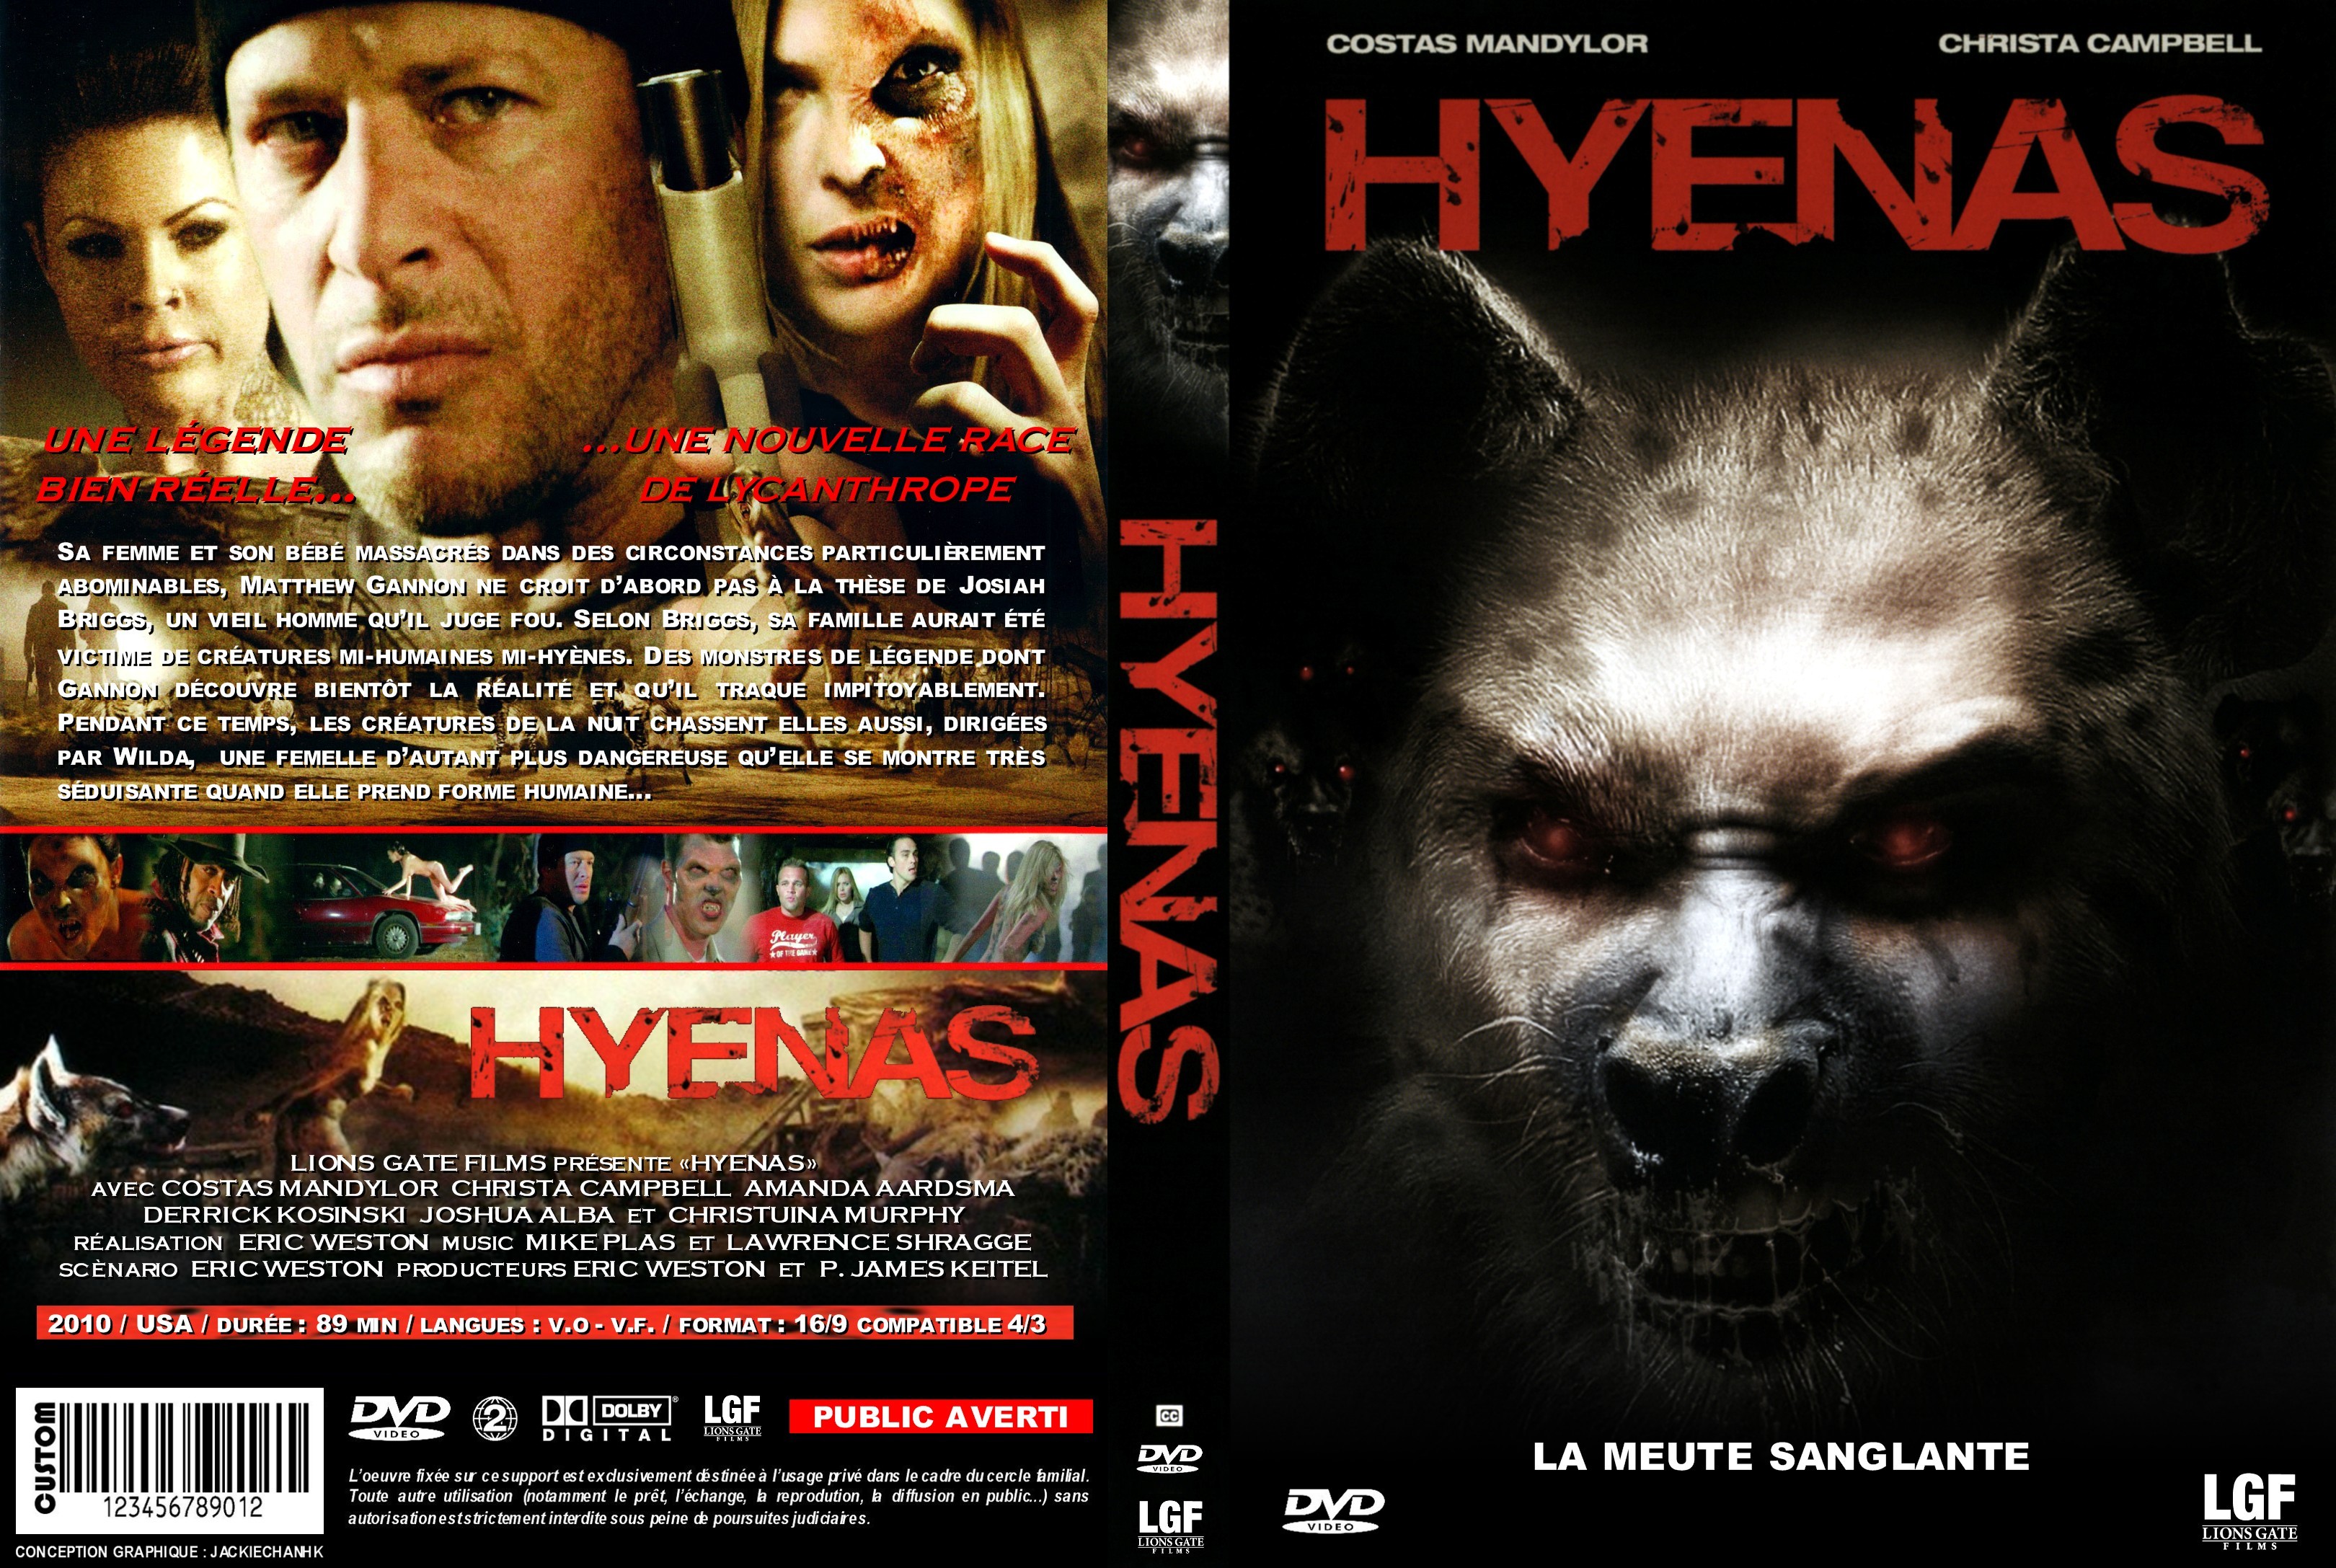 Jaquette DVD Hyenas custom